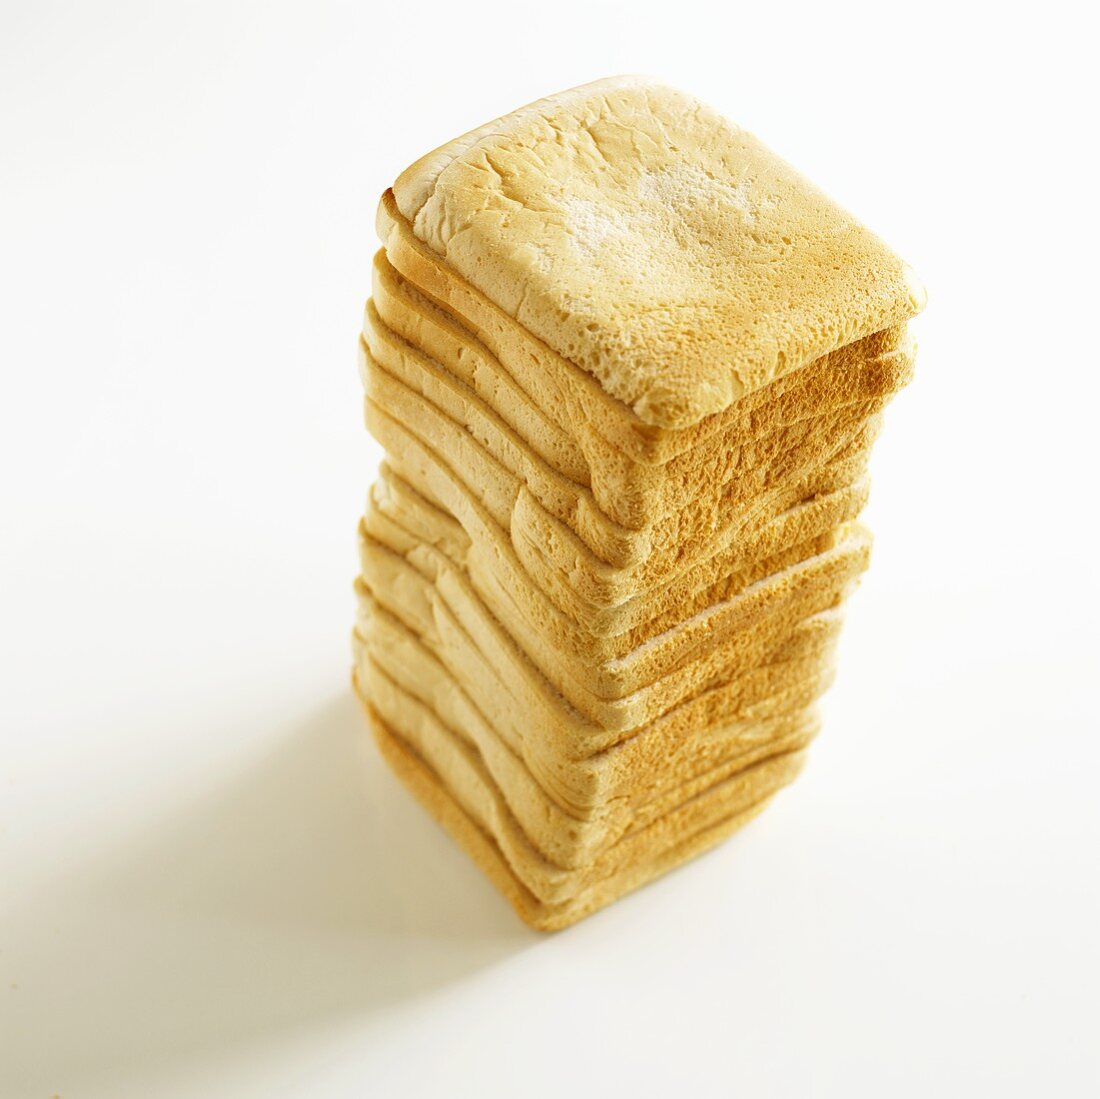 White sliced bread, stacked